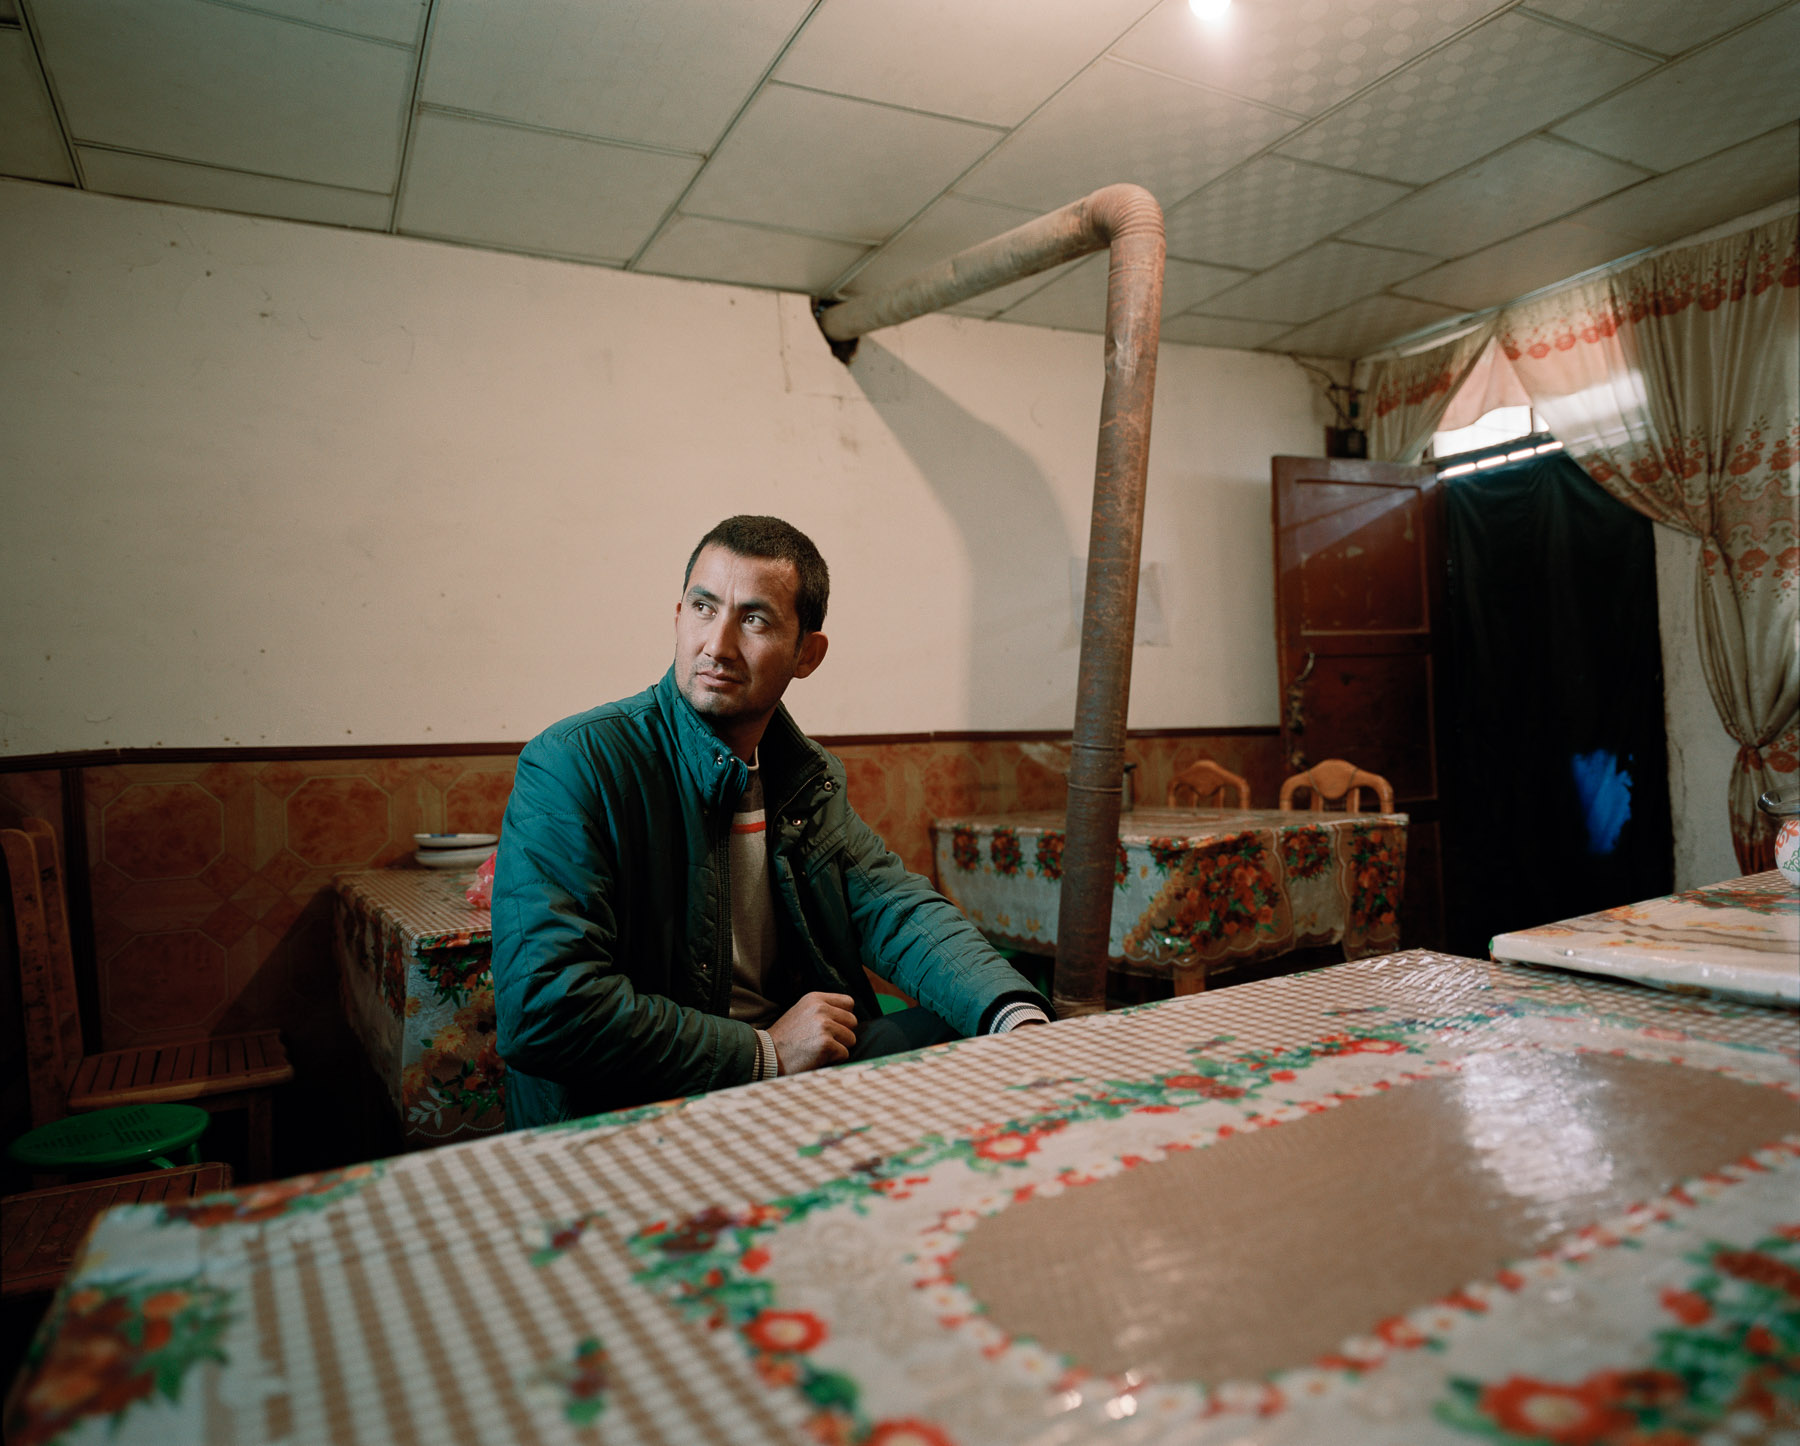  December 2016. Xinjiang province, China. Uighur man posing after his lunch in a roadside restaurant in Xinjiang.  